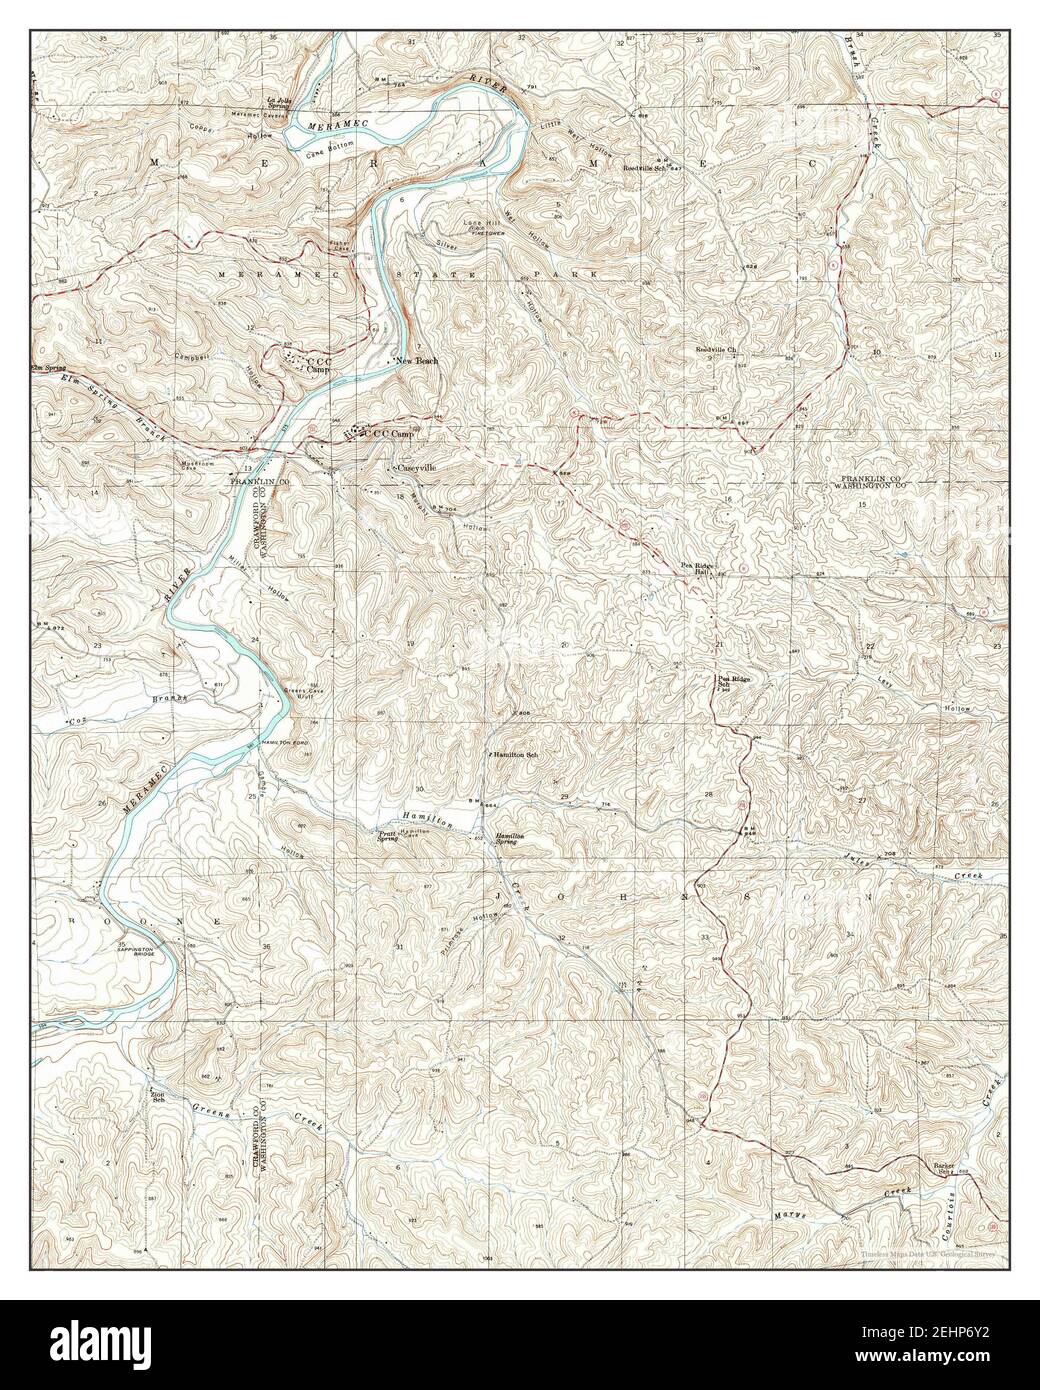 Meramec state Park, Missouri, map 1934, 1:24000, United States of America by Timeless Maps, data U.S. Geological Survey Foto Stock